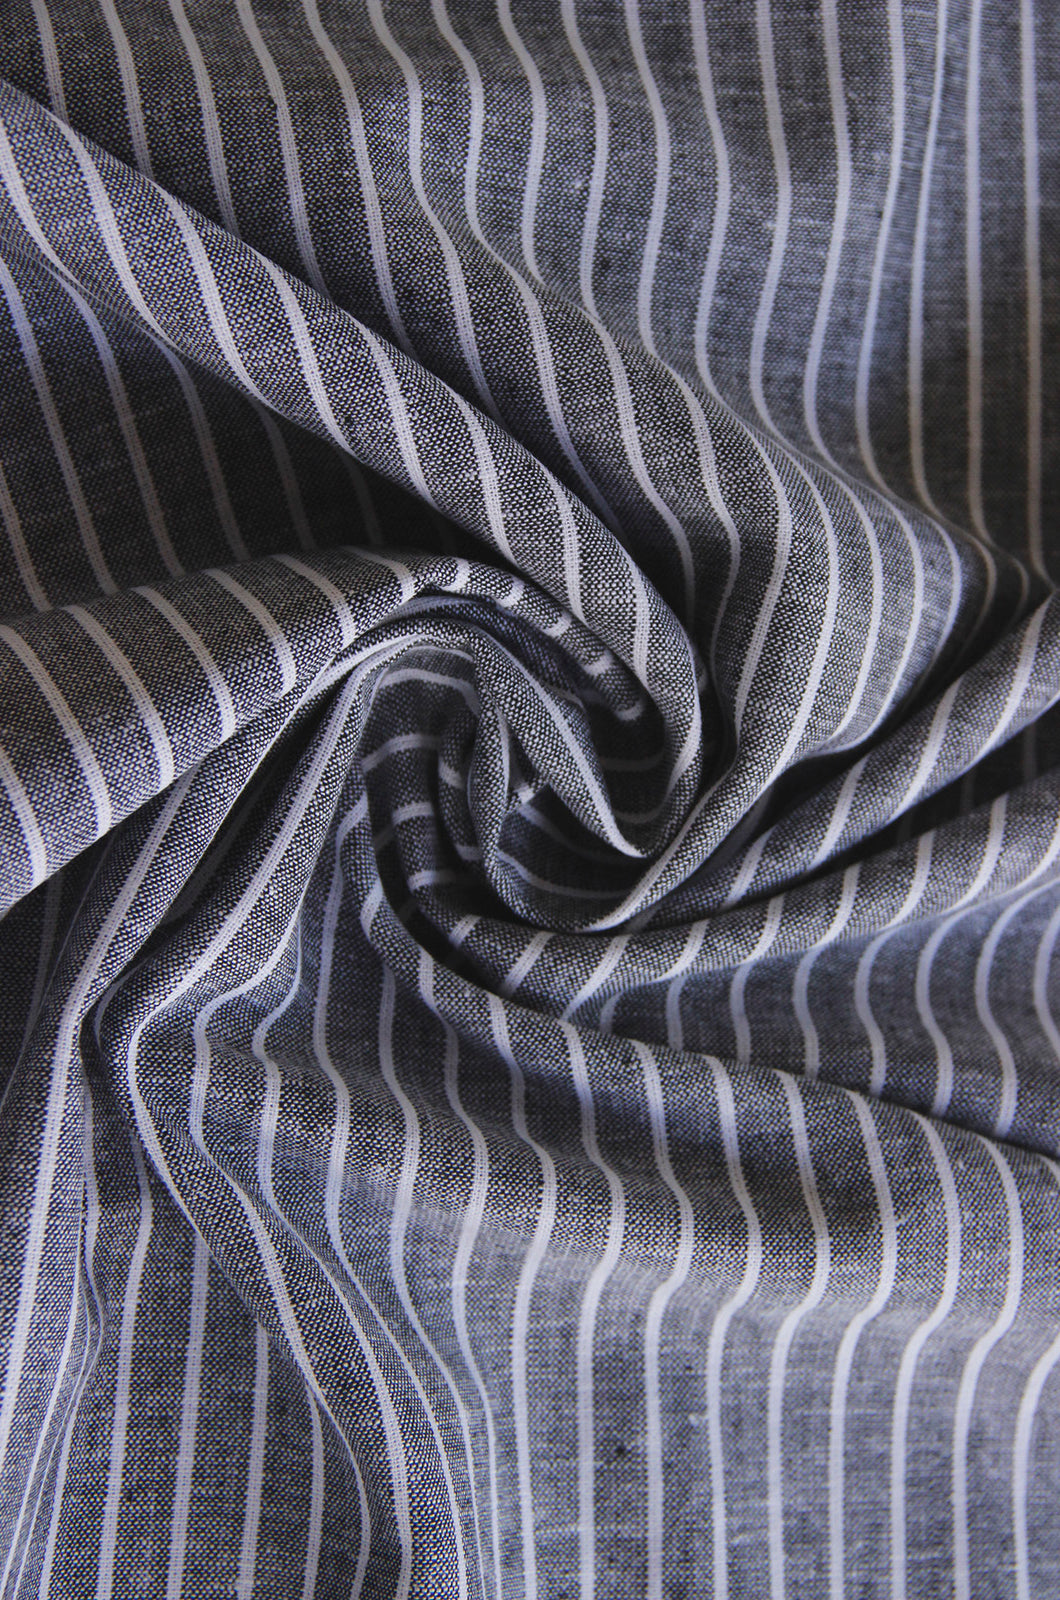 Buy 069-black Half linen patterned stripes * From 50 cm